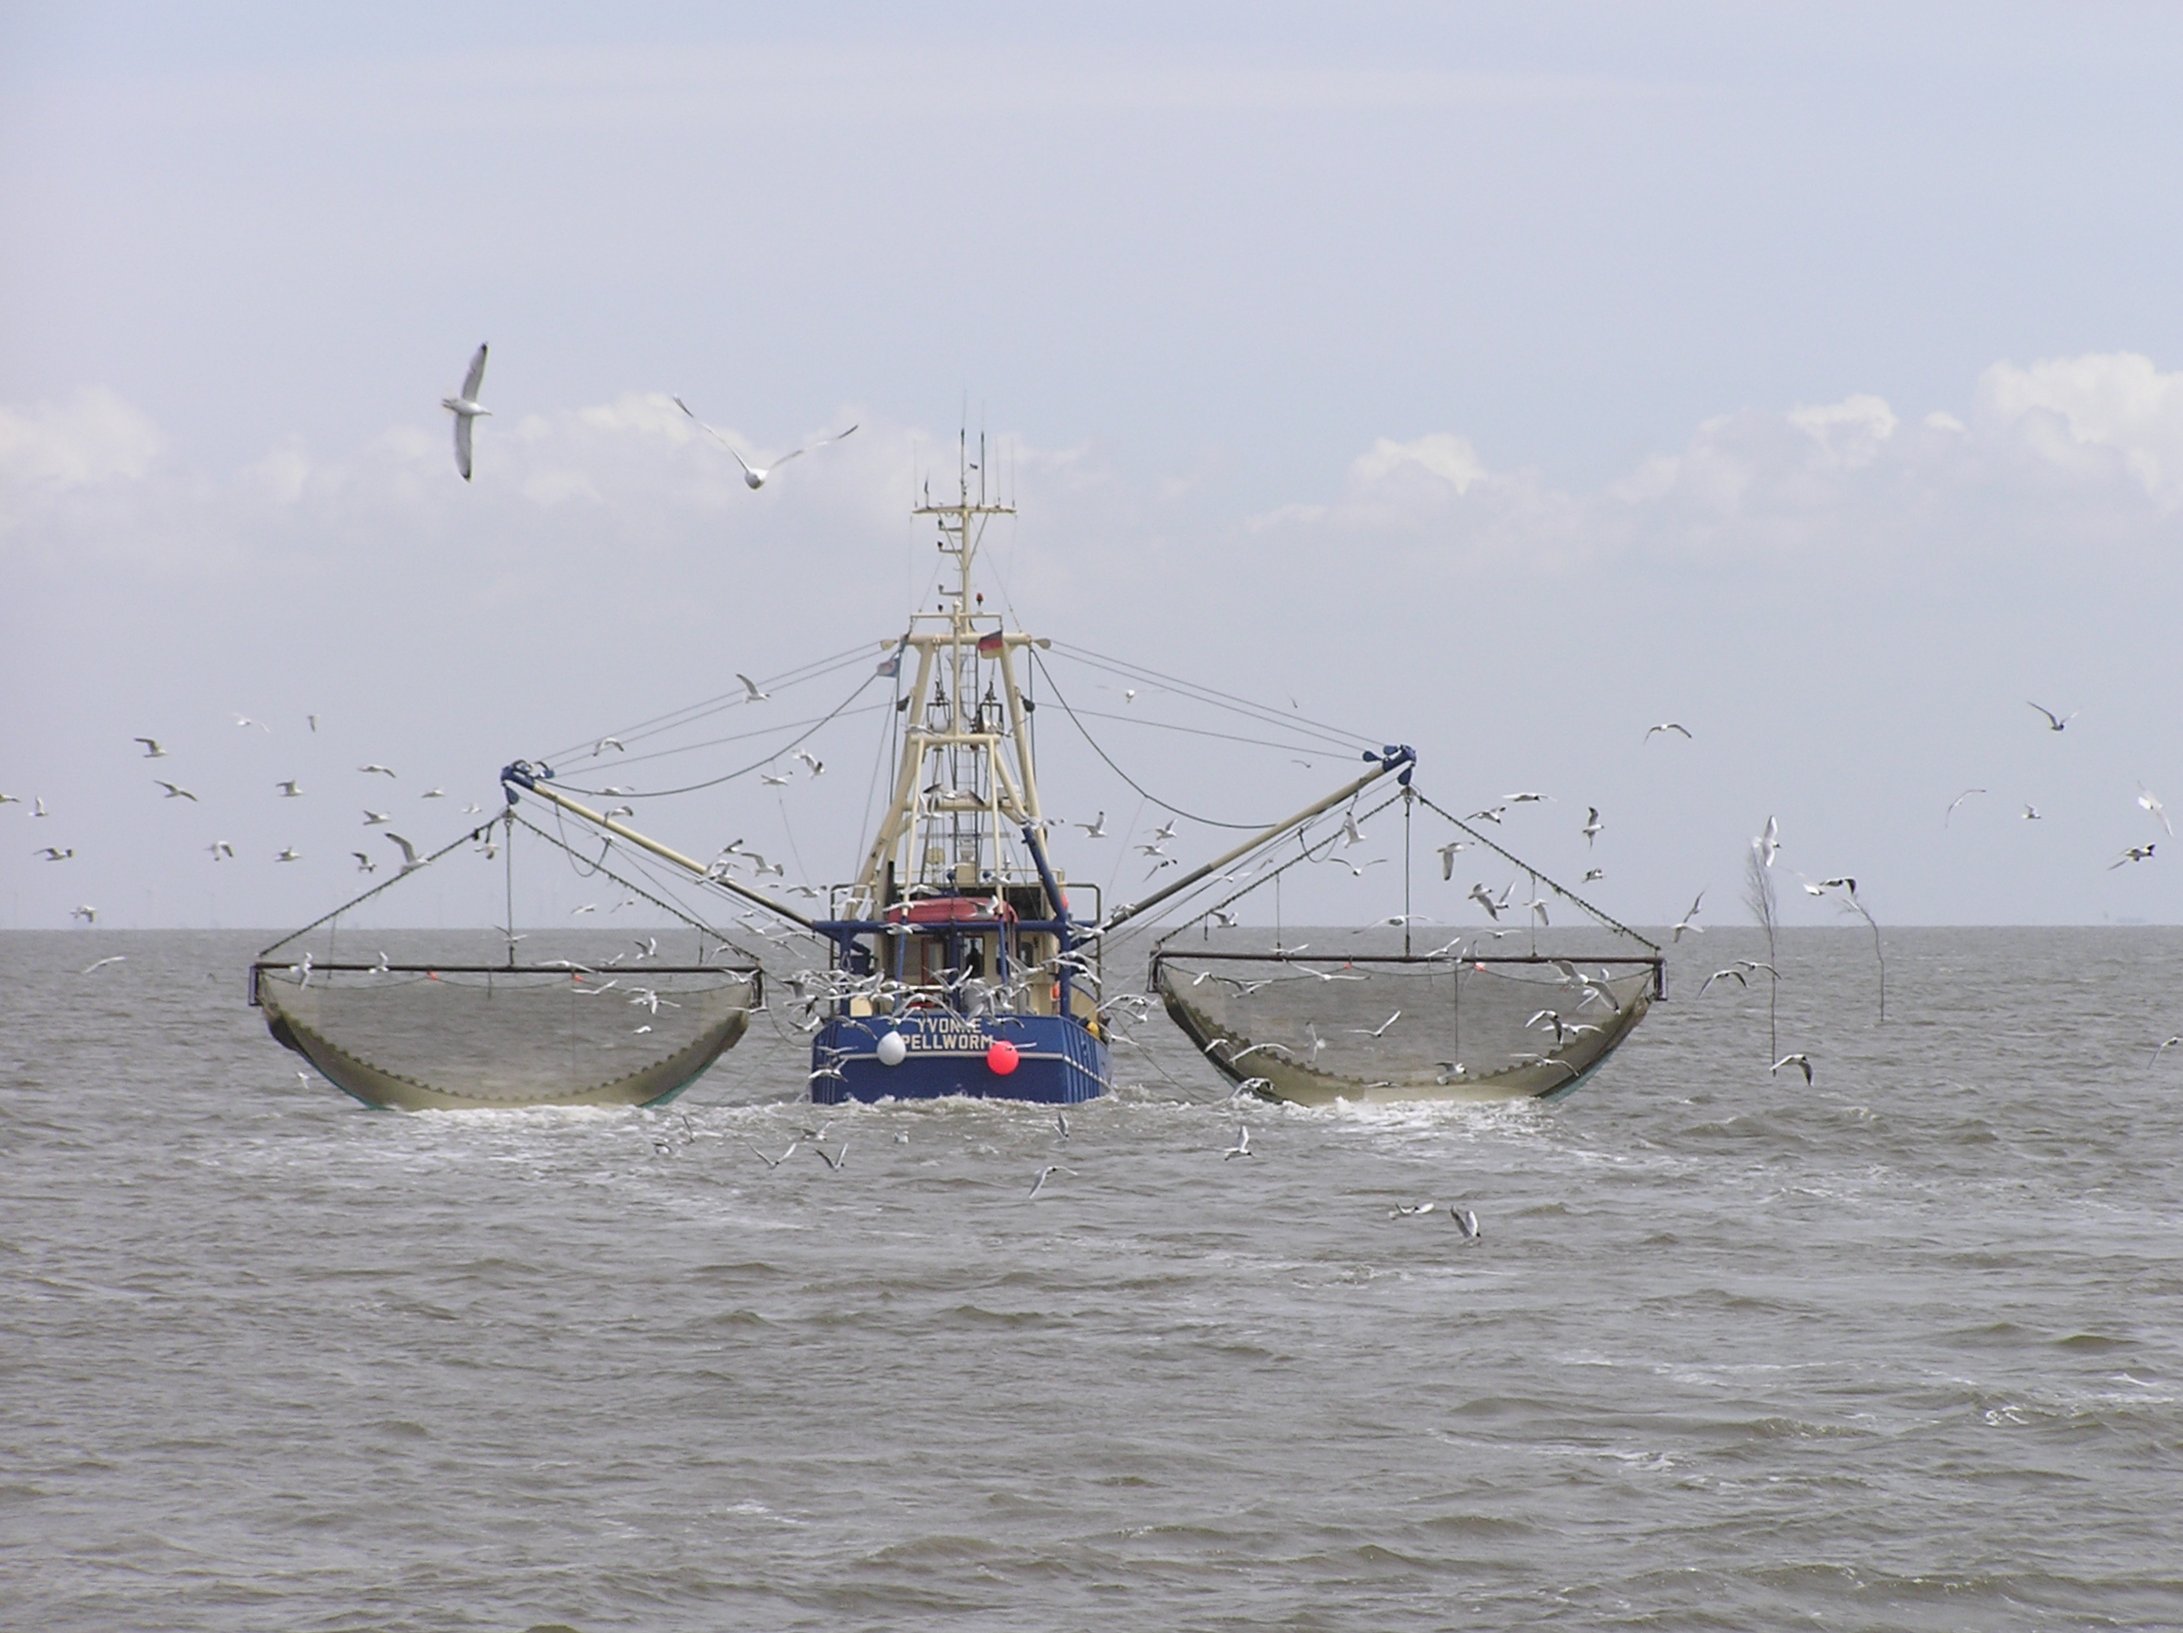 Fishing vessel at work (photo: Jom)